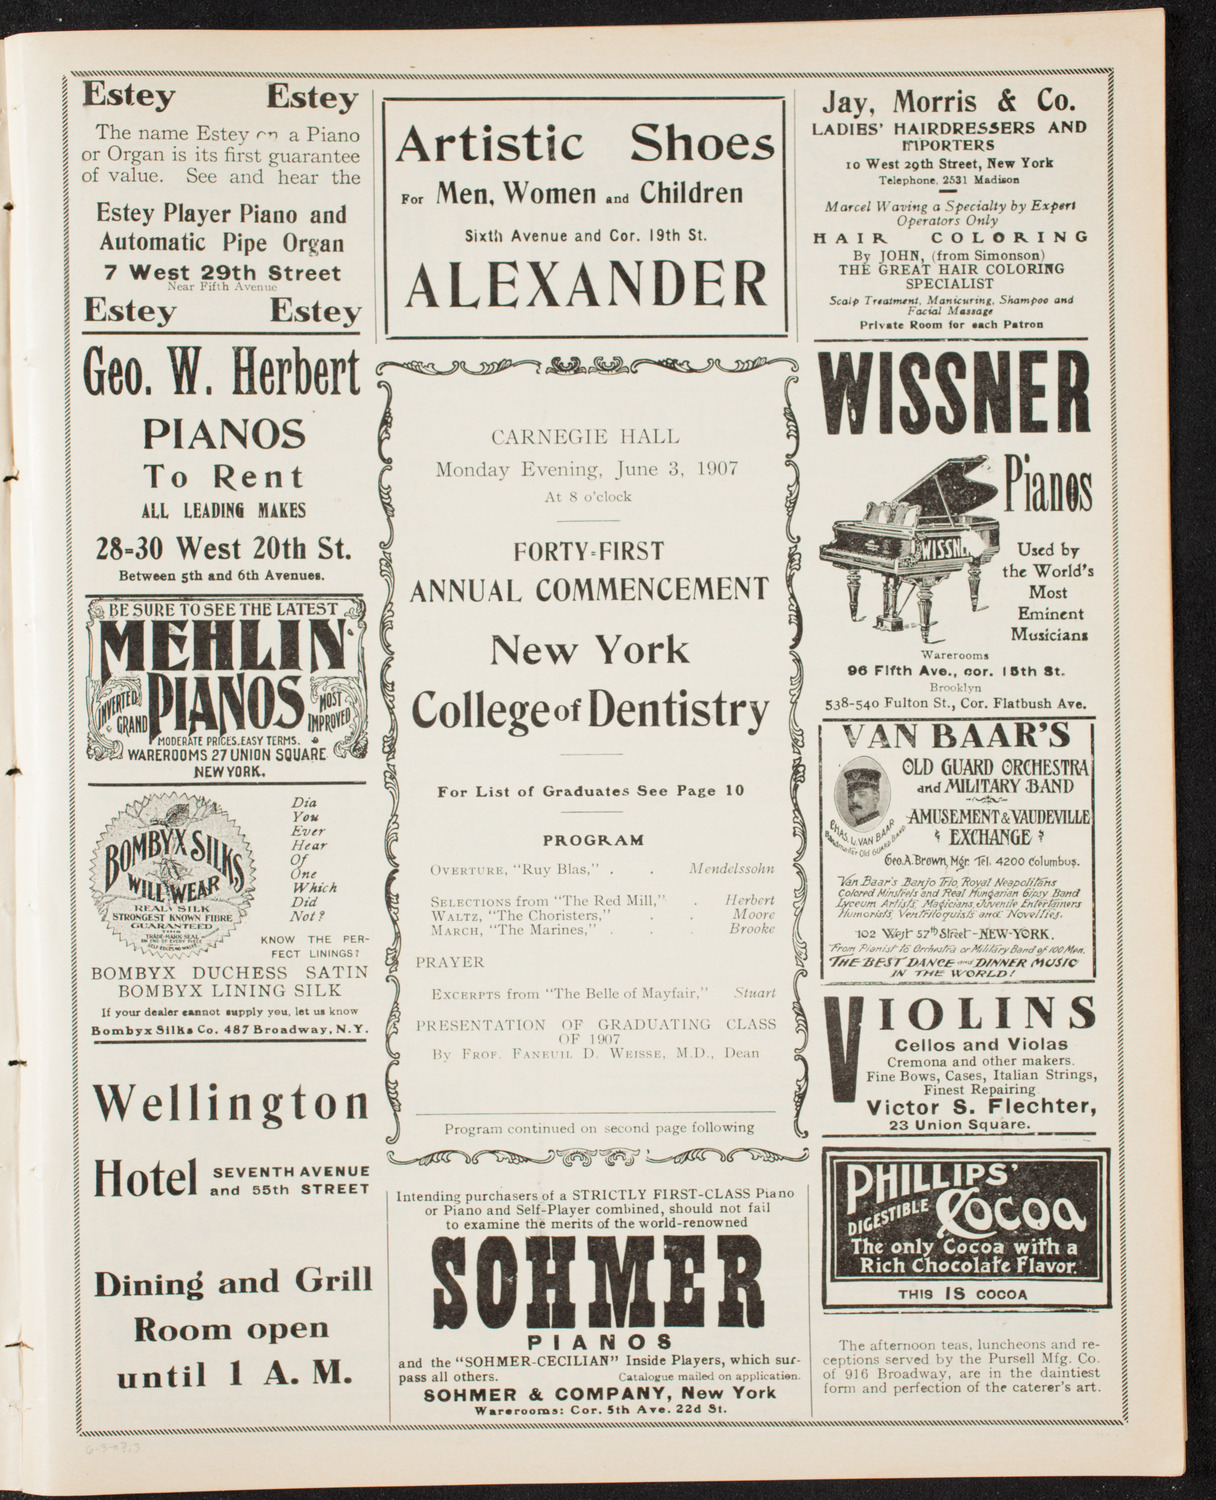 Graduation: New York College of Dentistry, June 3, 1907, program page 5